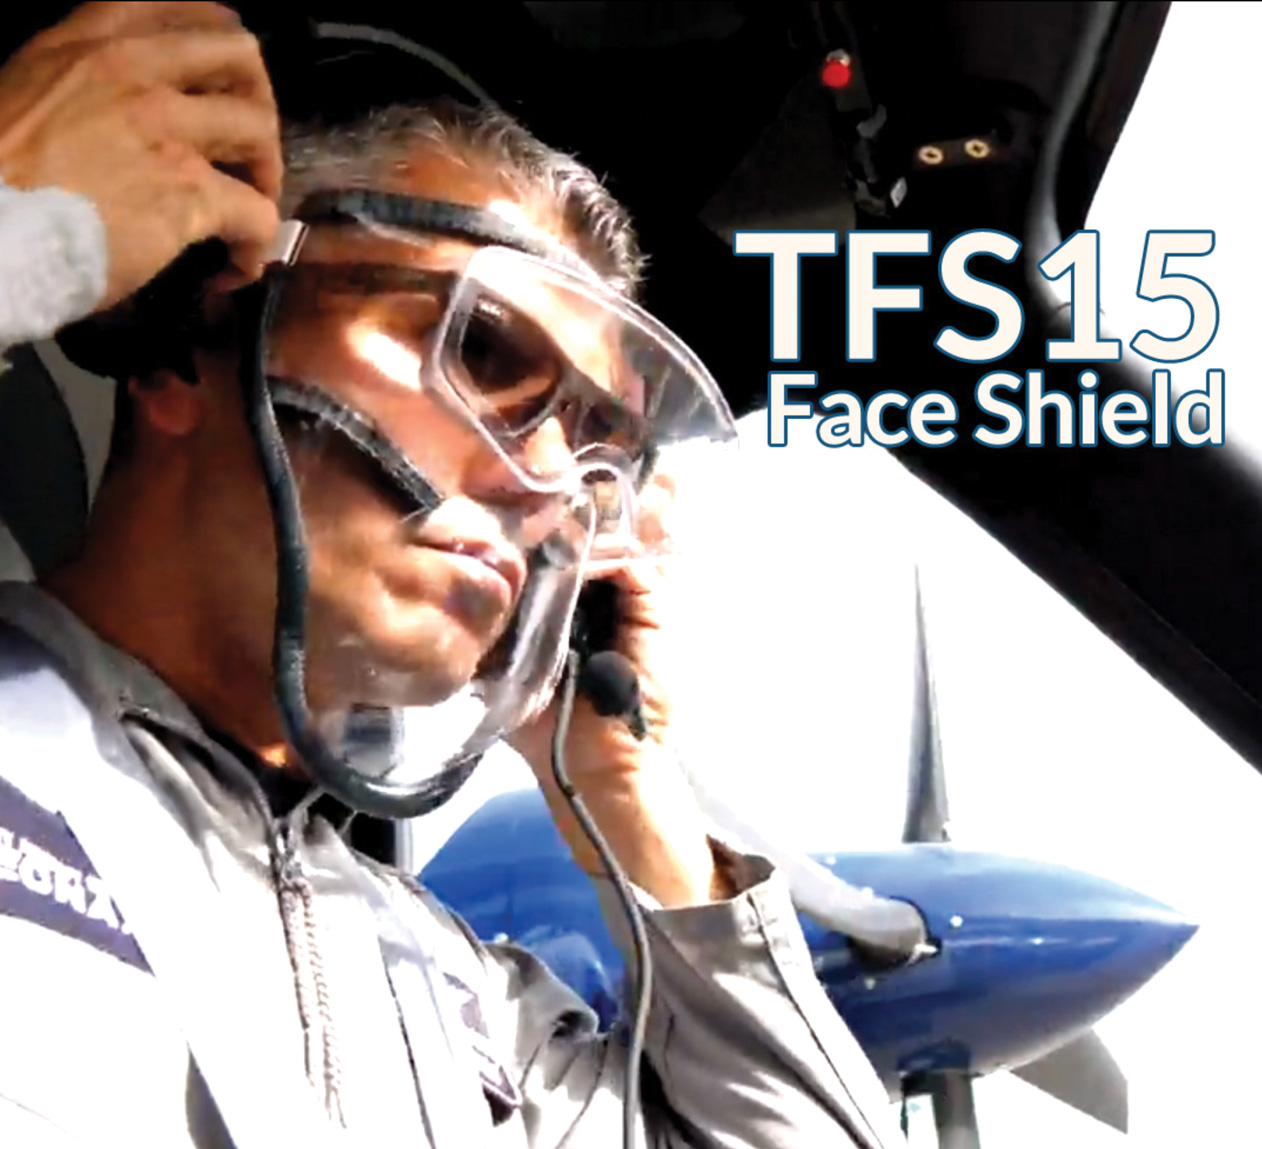 Tecnam TFS-15 XV Extra Vision Face Shield for AviationImage Id:151398